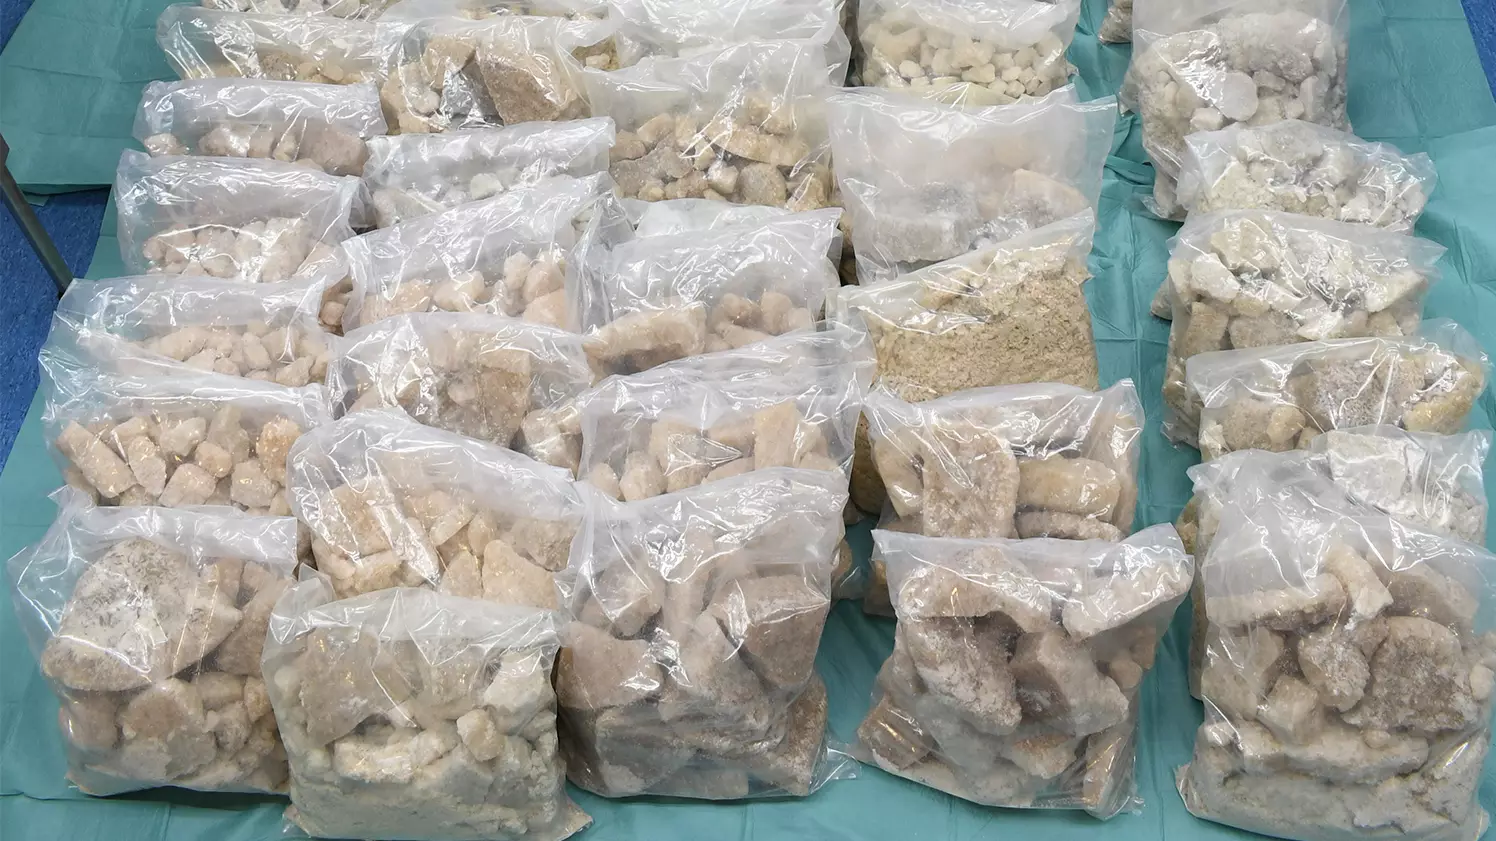 Australian Police Help Stop 700kg Of MDMA From Getting To Schoolies In Brisbane